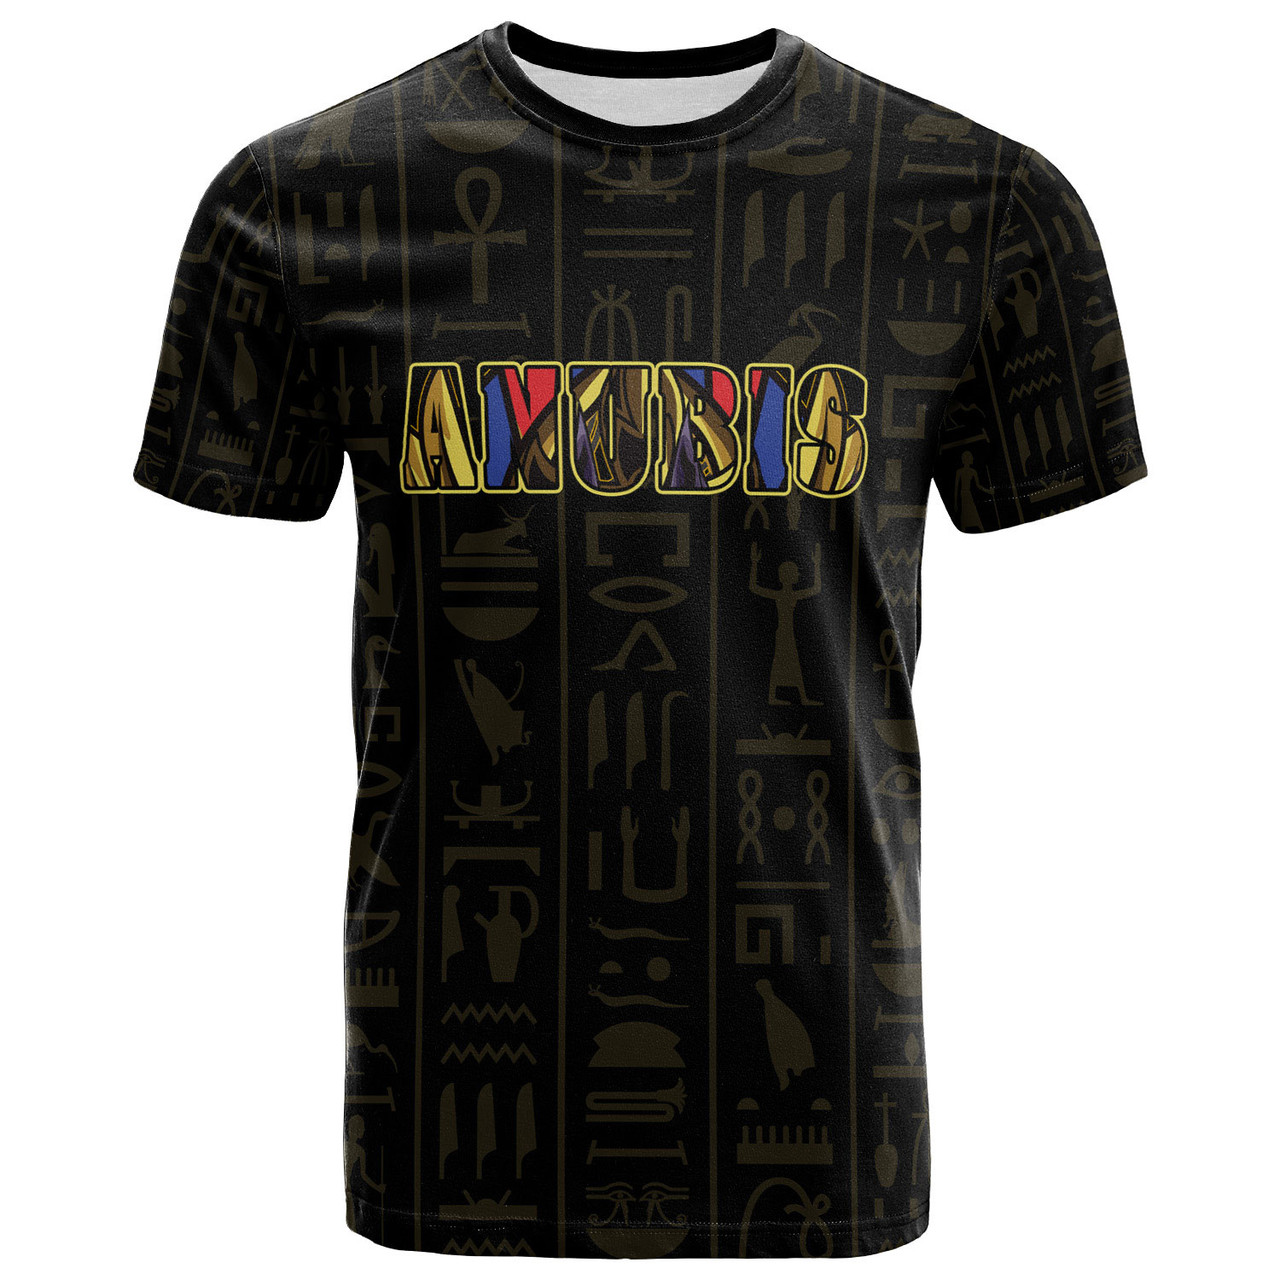 Egyptian T-Shirt - Egyptian God Anubis T-Shirt Desert Fashion 1